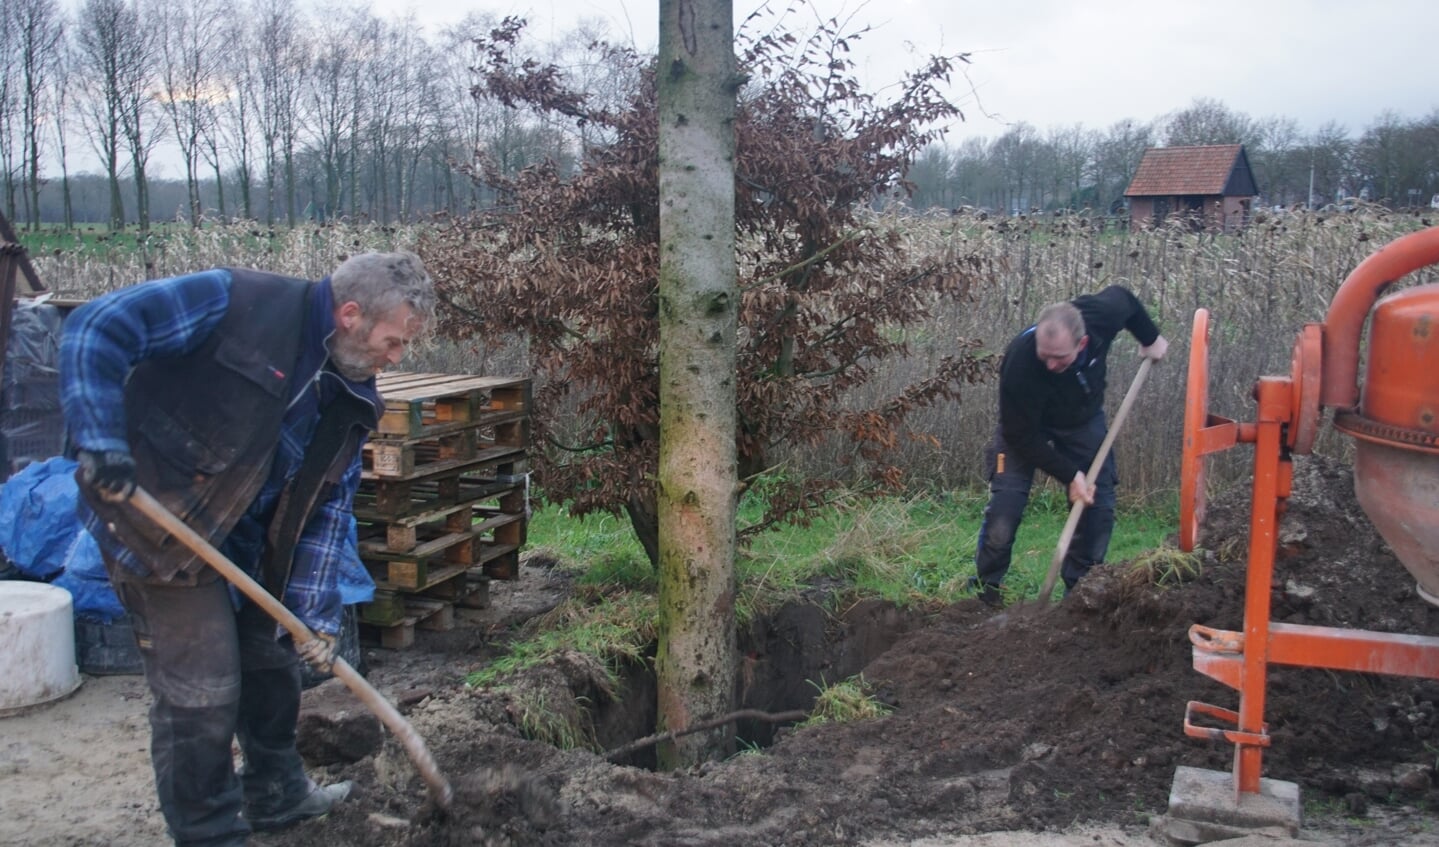 Ronnie Rots (links) en Imko Meinen graven de meiboom in. Foto: Frank Vinkenvleugel